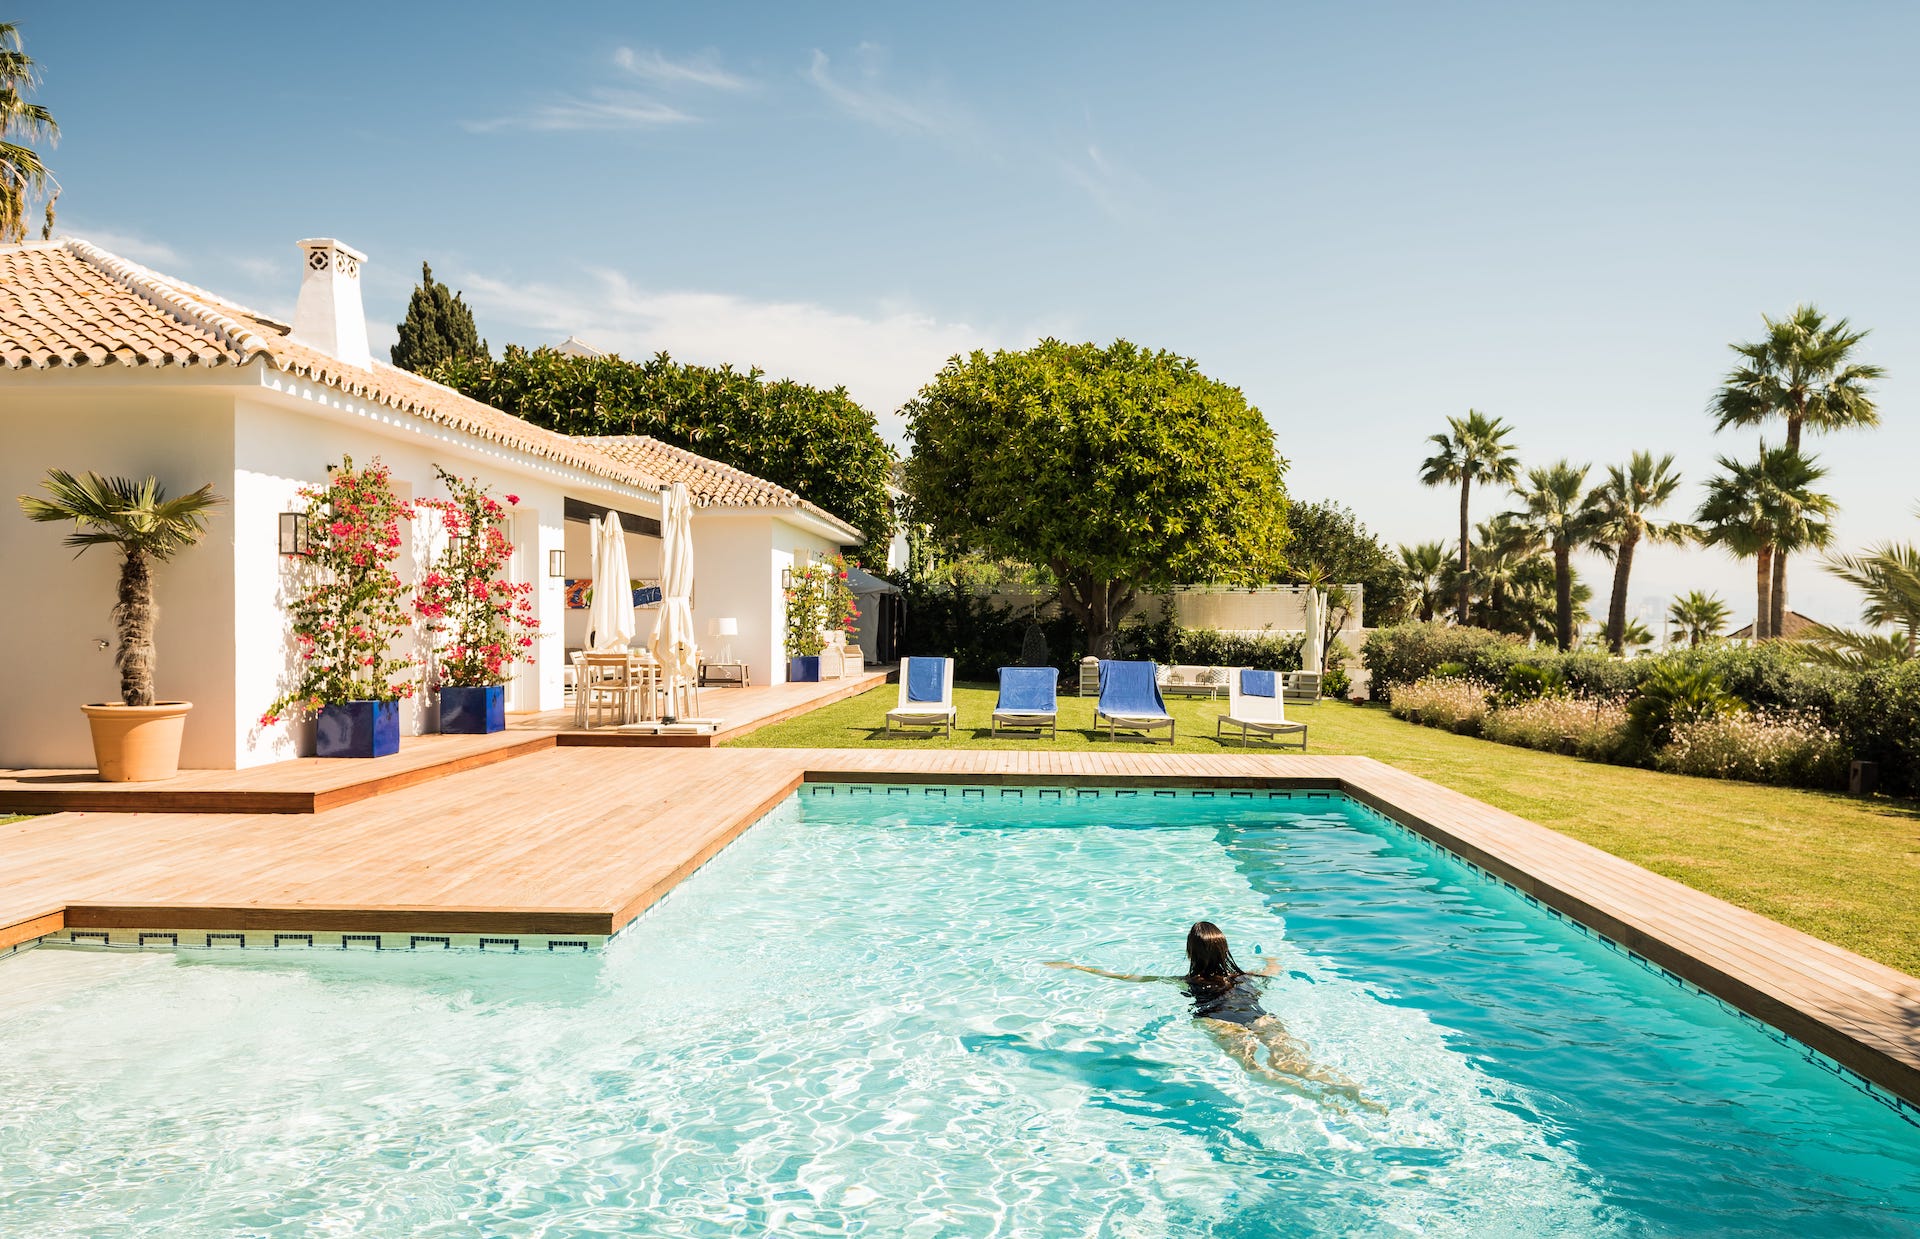 Inmobiliaria en Marbella, real estate, properties for sale